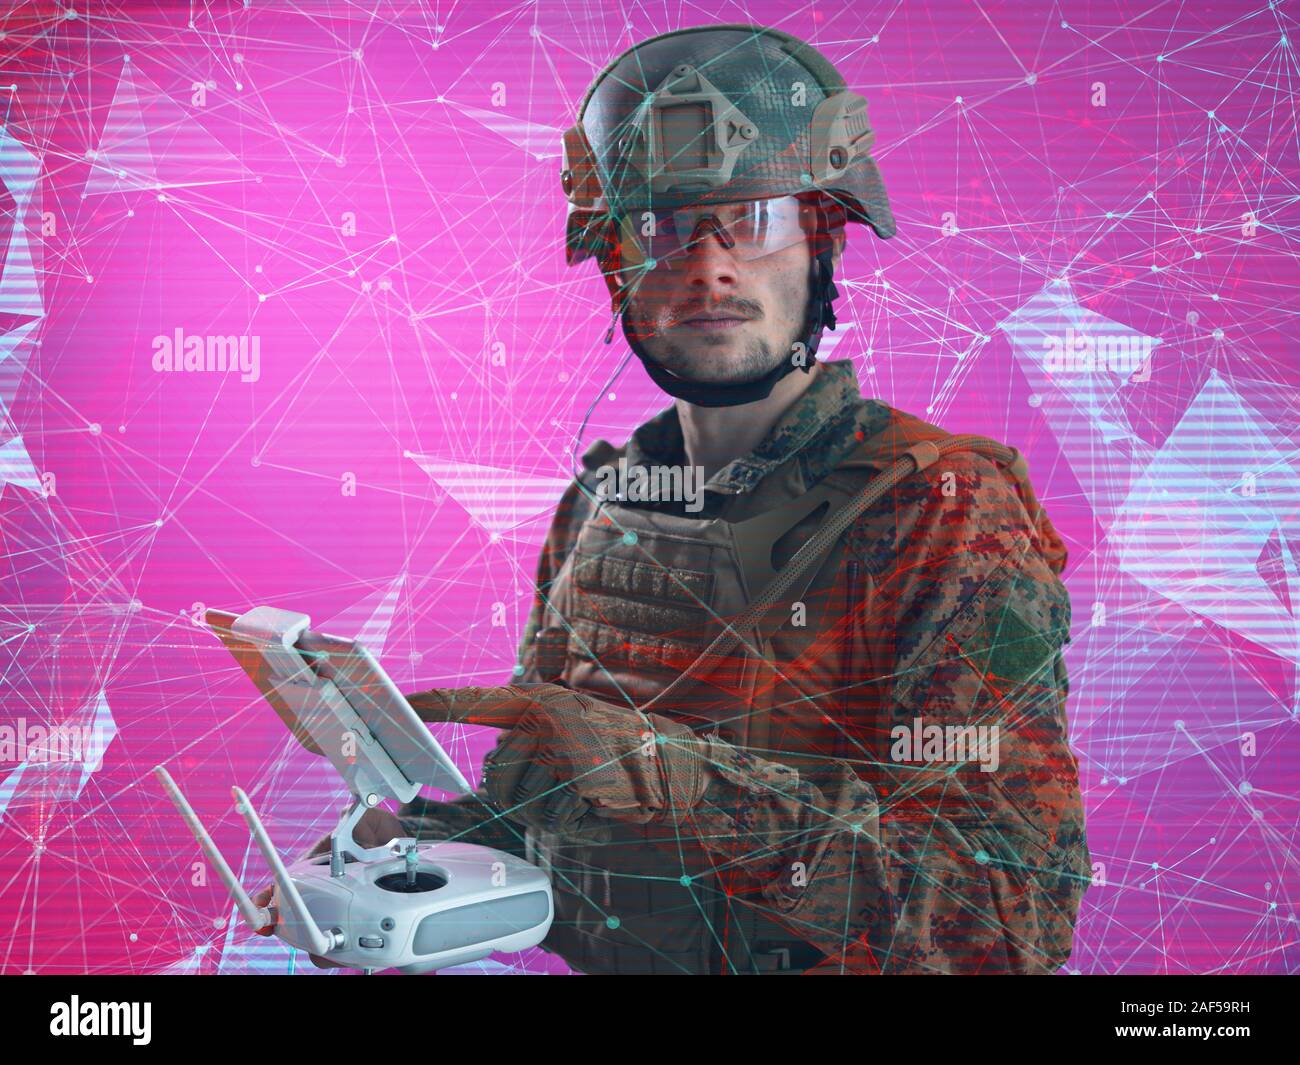 modern warfare soldier as drone control technician WITH GLITCH COMPUTER ERROR EFFECT Stock Photo